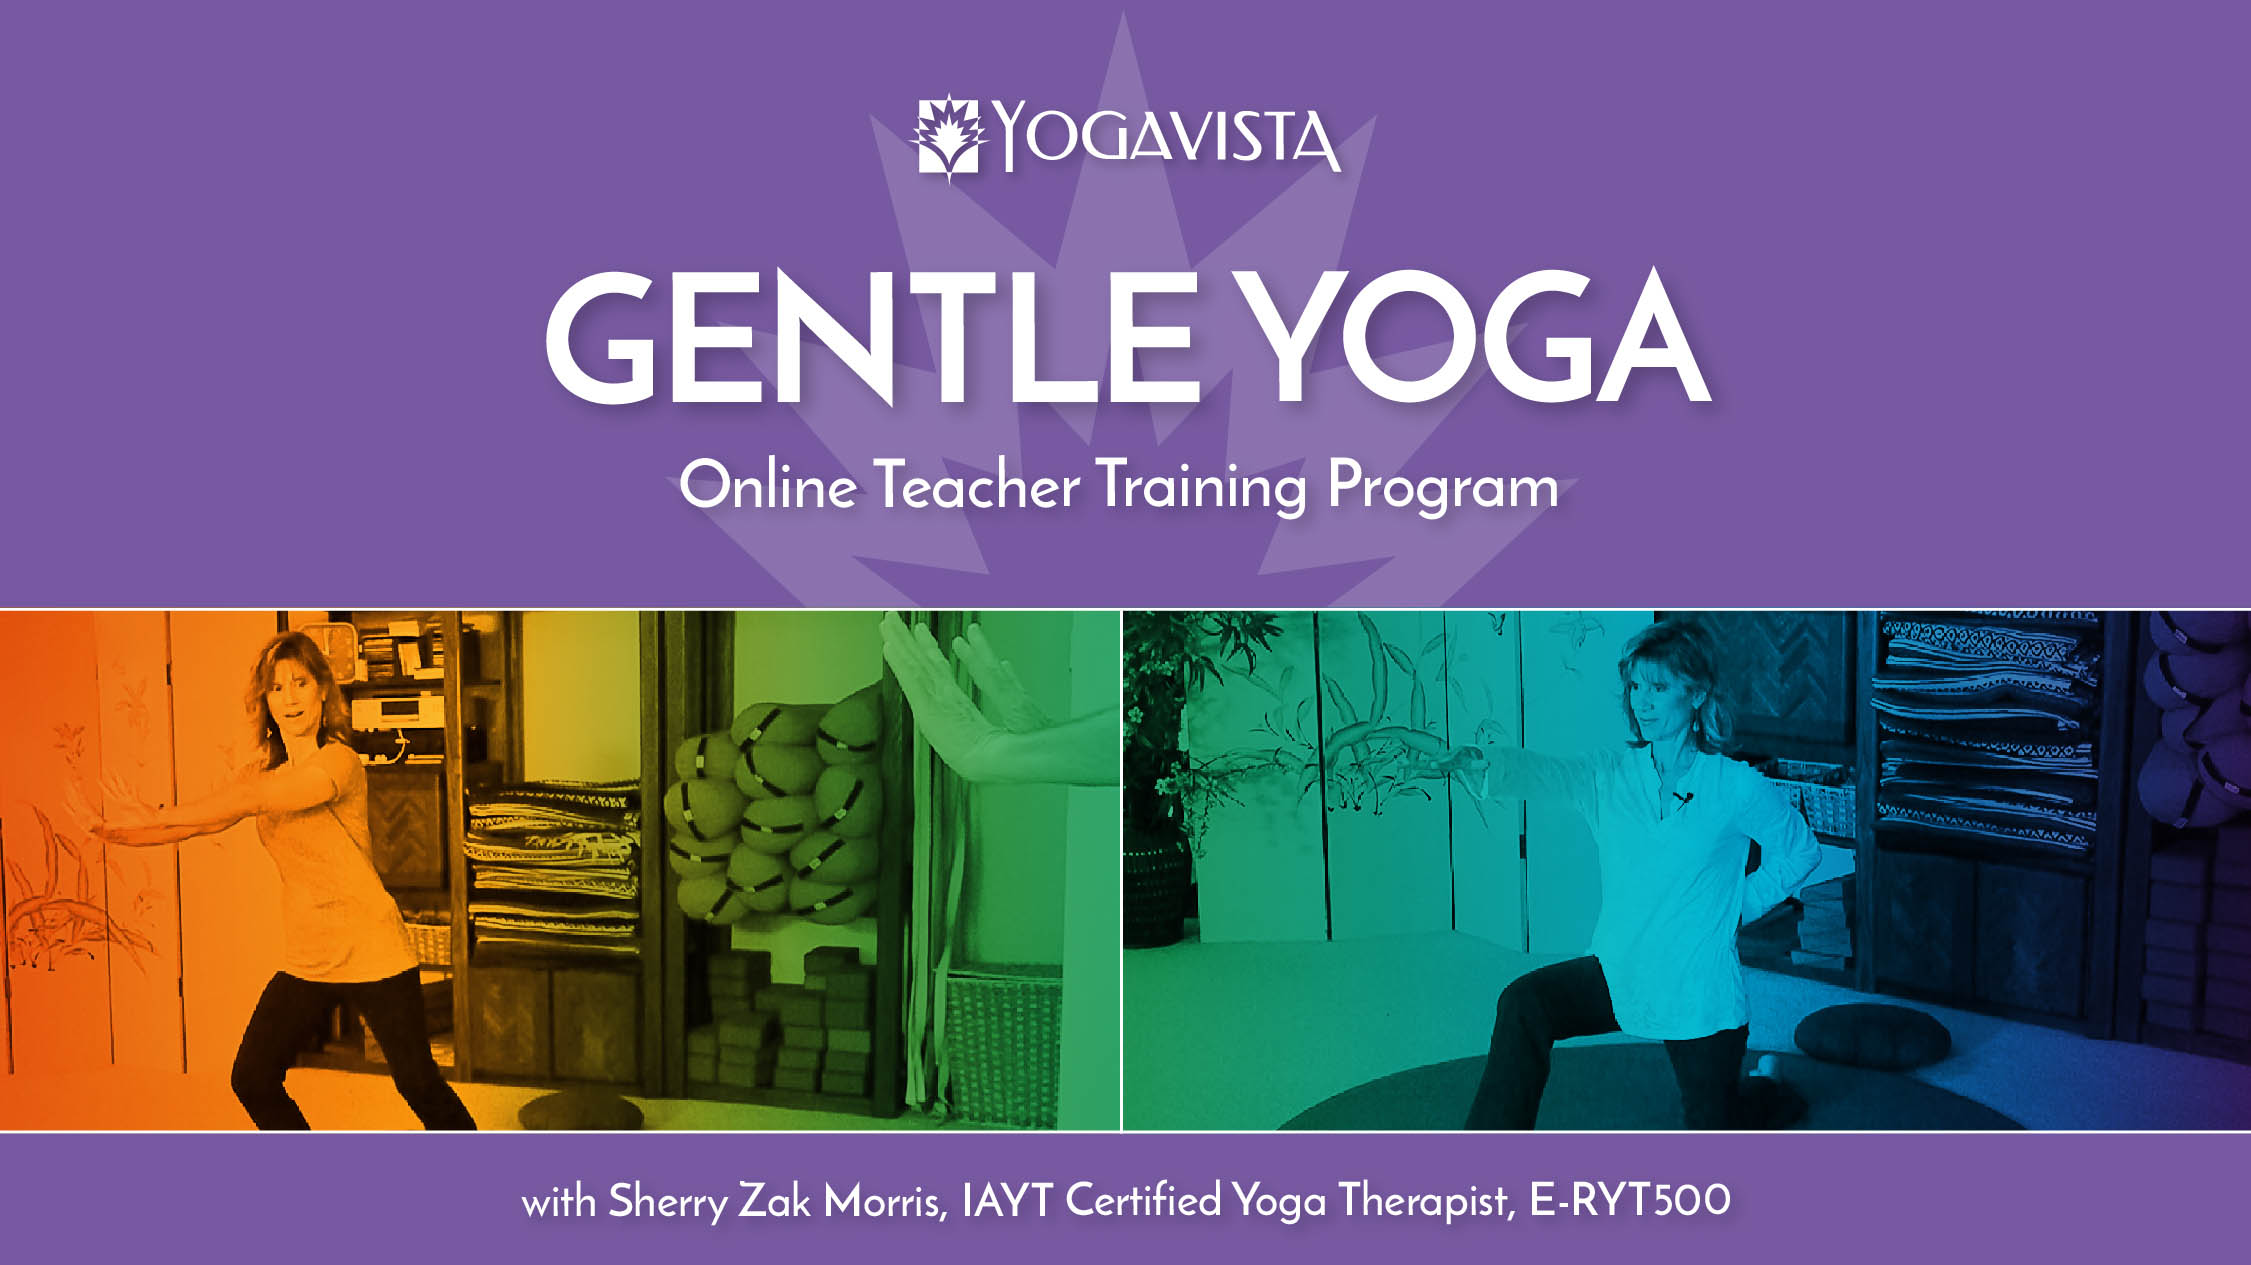 Online Gentle Yoga Teacher Training Program with Sherry Zak Morris